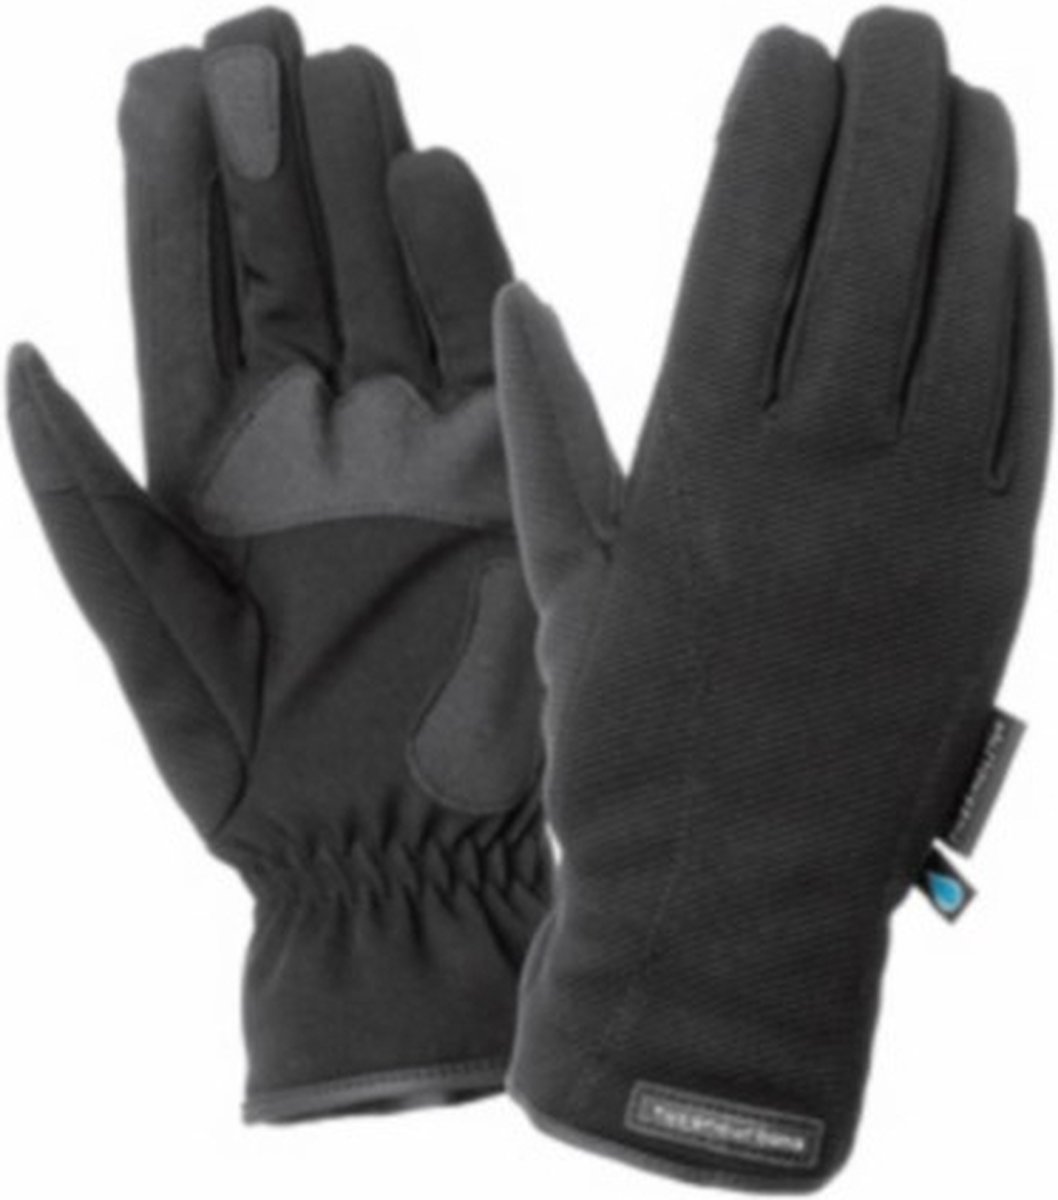 kleding handschoenset dames XS zwart tucano 9954hw mary touch